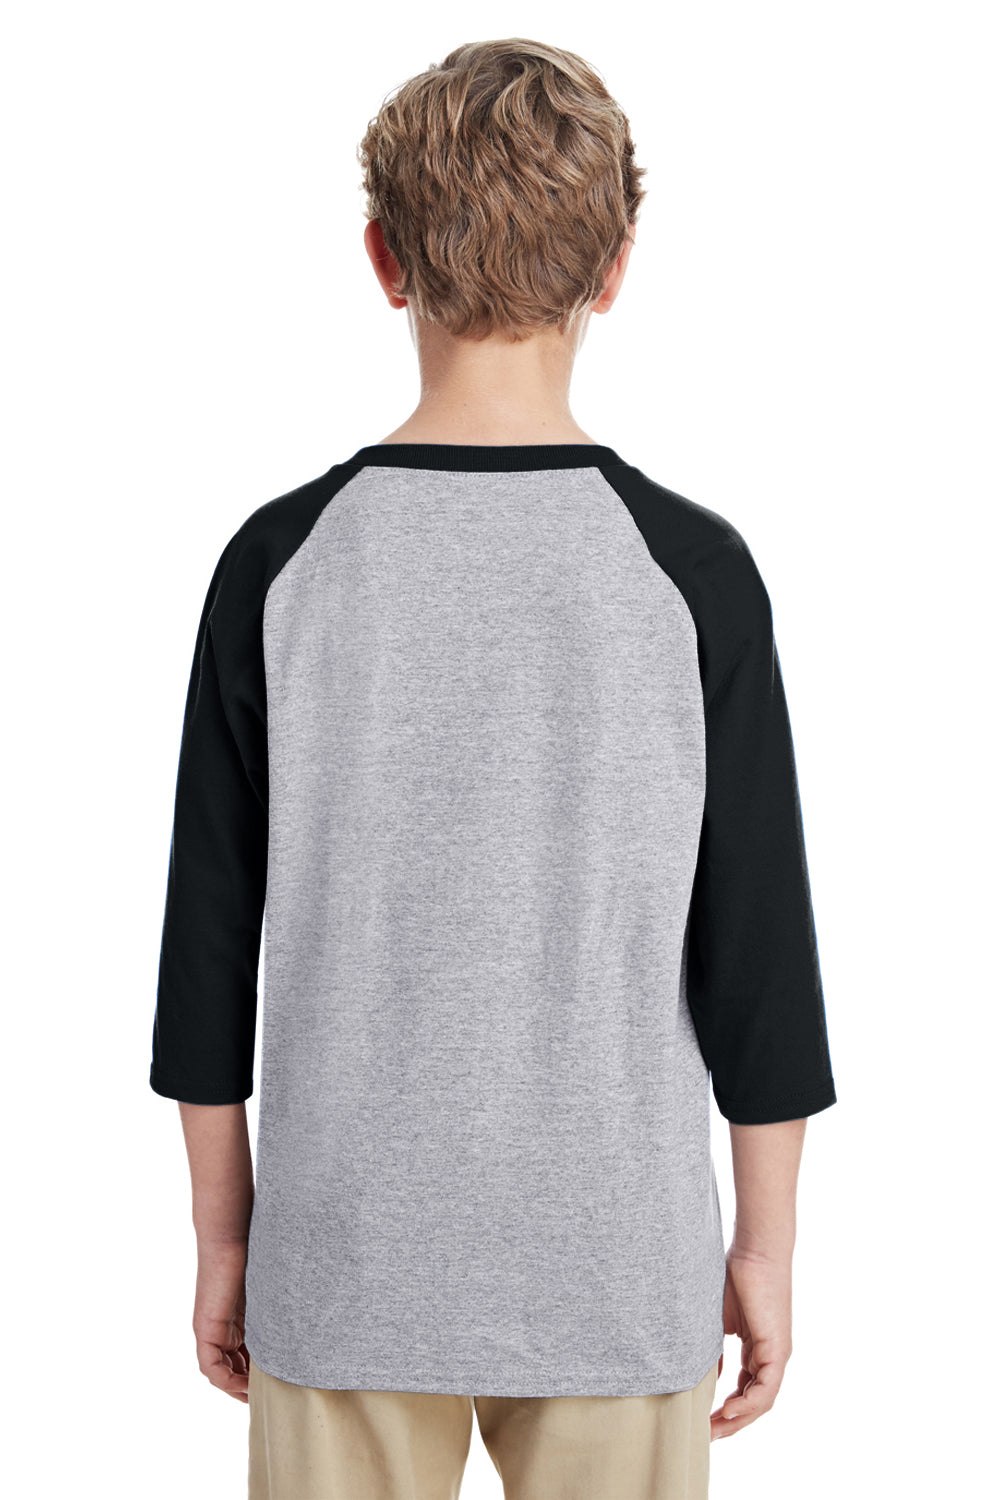 Gildan G570B Youth 3/4 Sleeve Crewneck T-Shirt Grey/Black Back